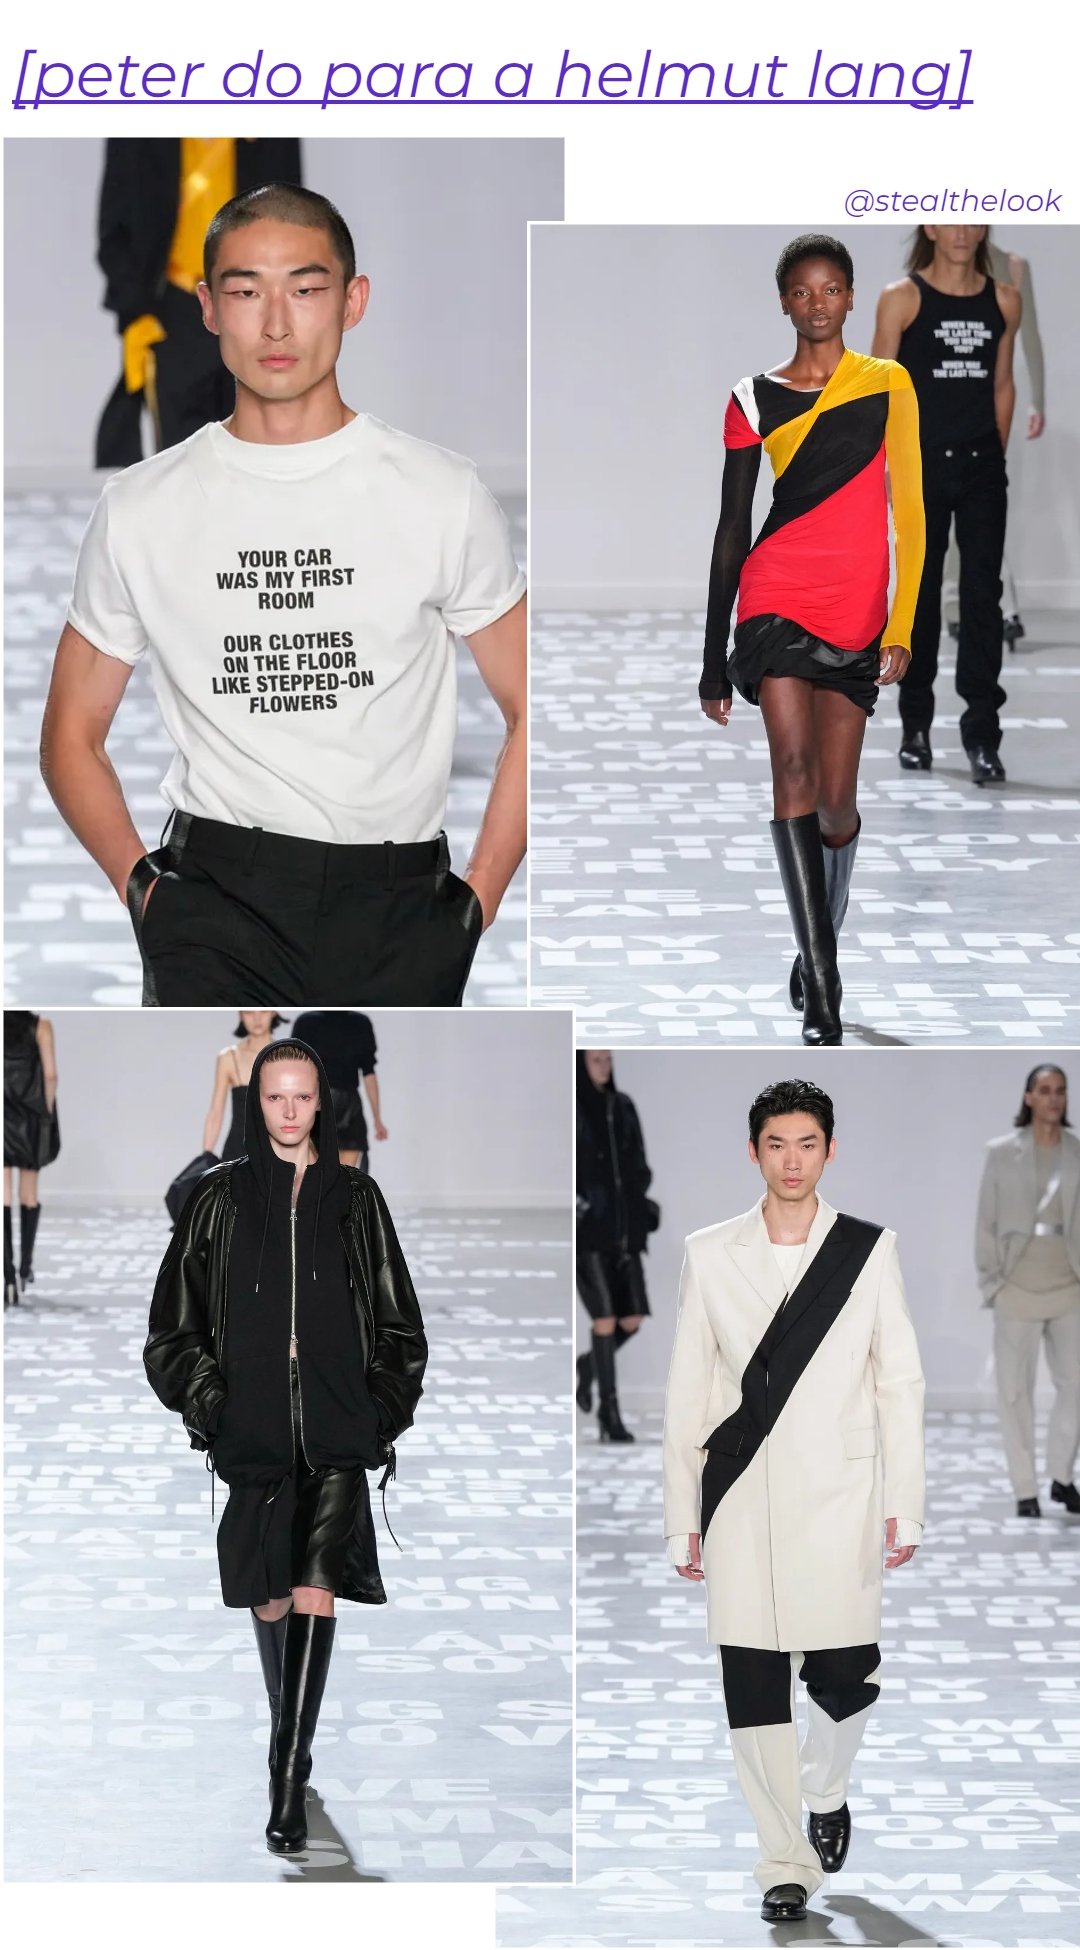 Helmut Lang - roupas diversas - NYFW - primavera - colagem de imagens - https://stealthelook.com.br